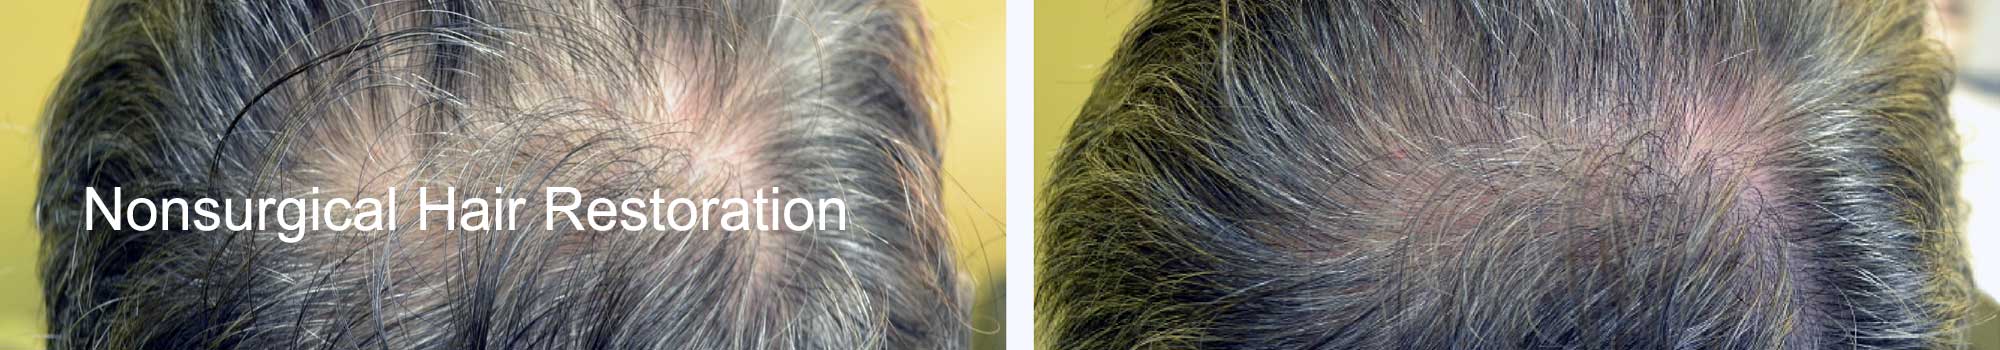 Nonsurgical Hair Restoration